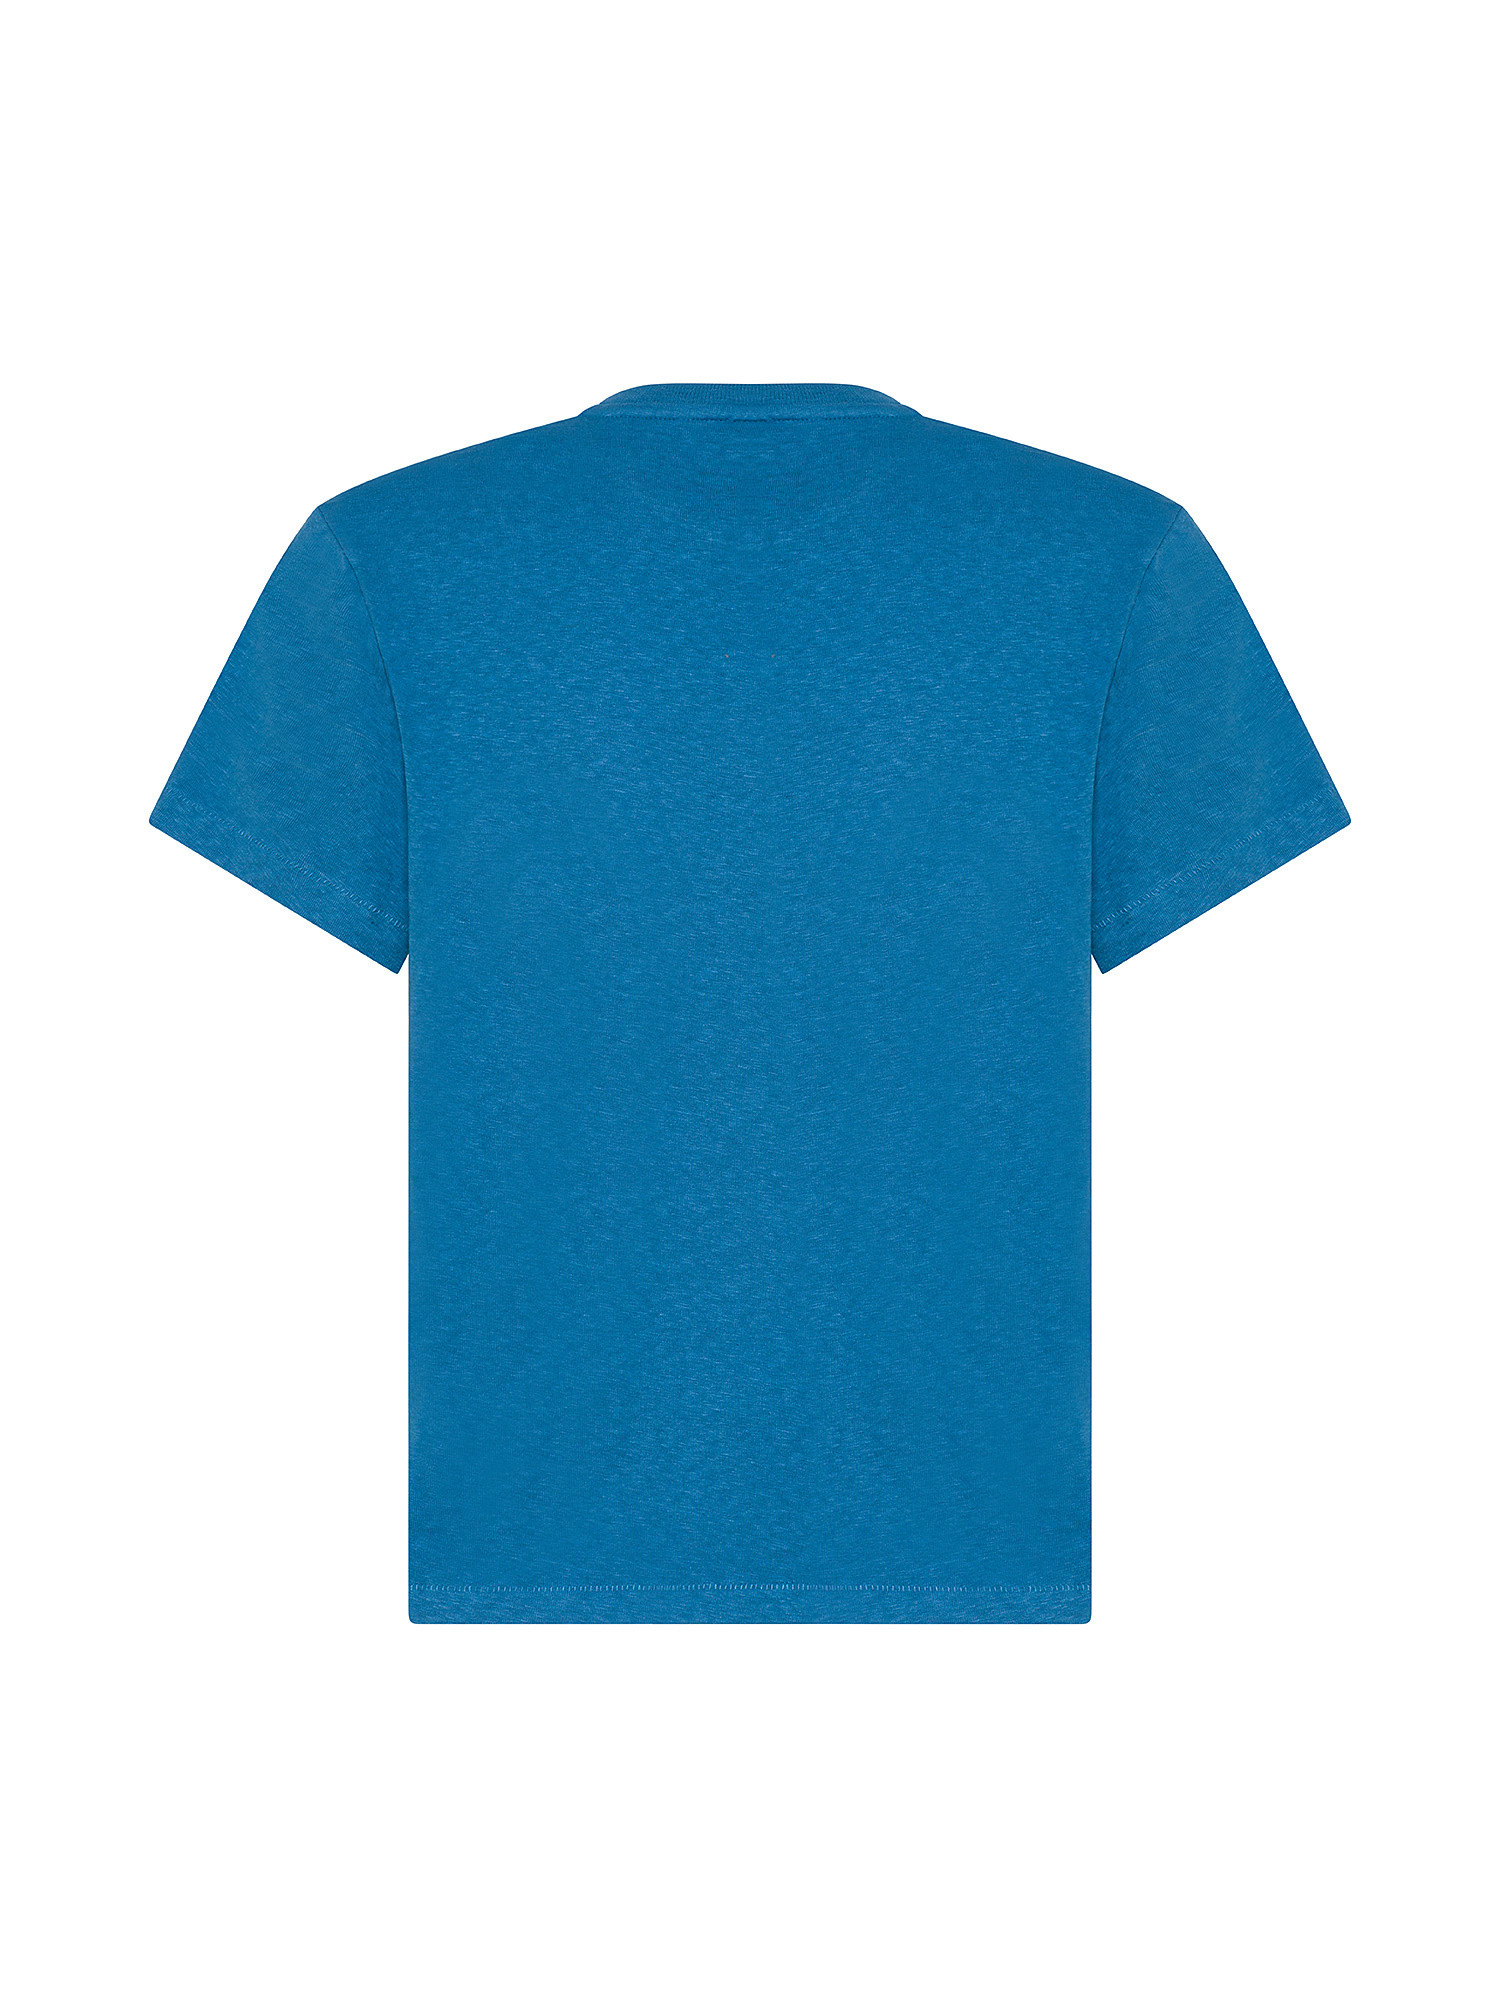 Levi's - Cotton T-shirt, Light Blue, large image number 1